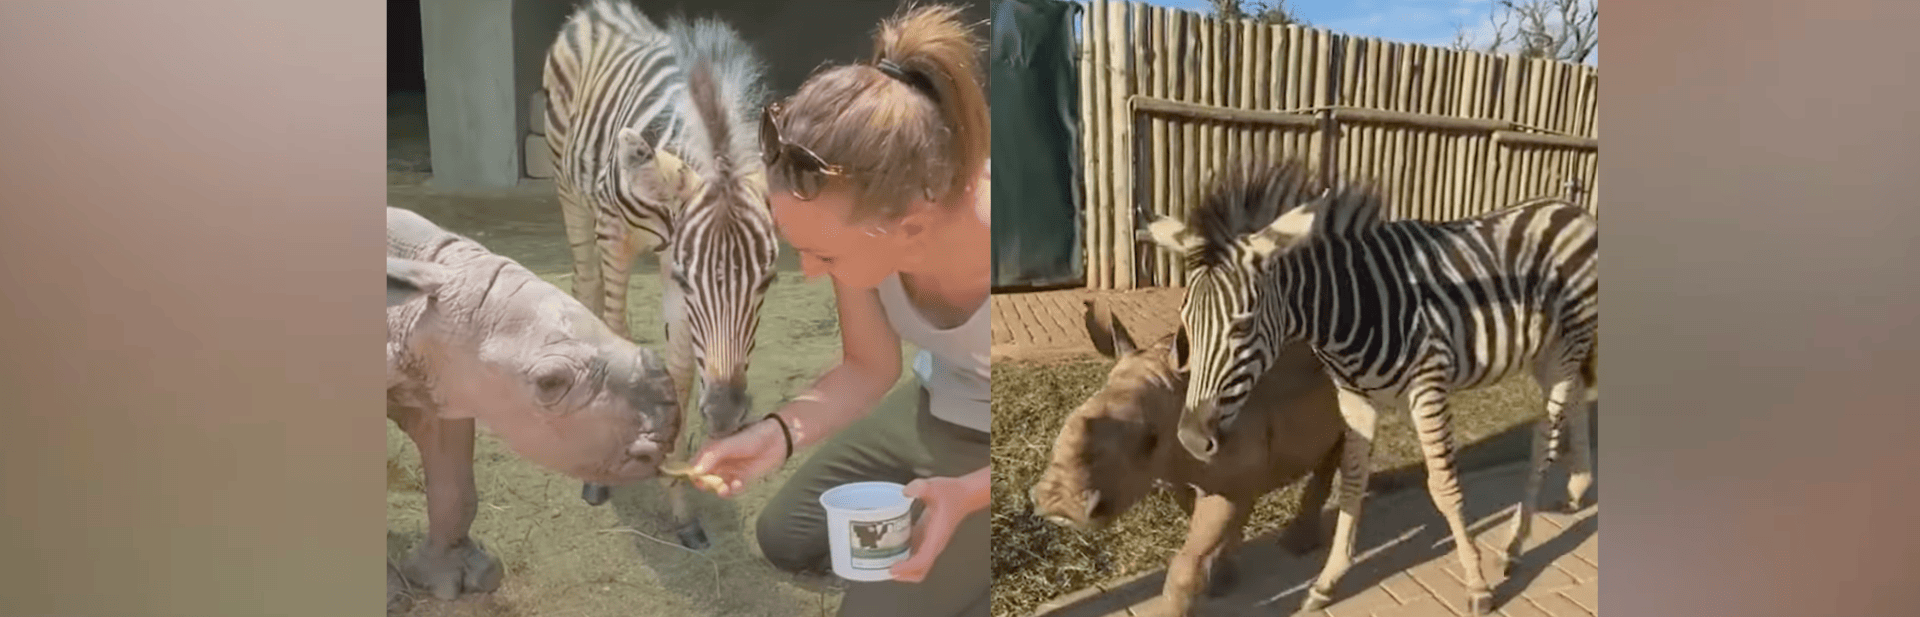 Abandoned Zebra and Orphaned Rhino Find Healing in Friendship 